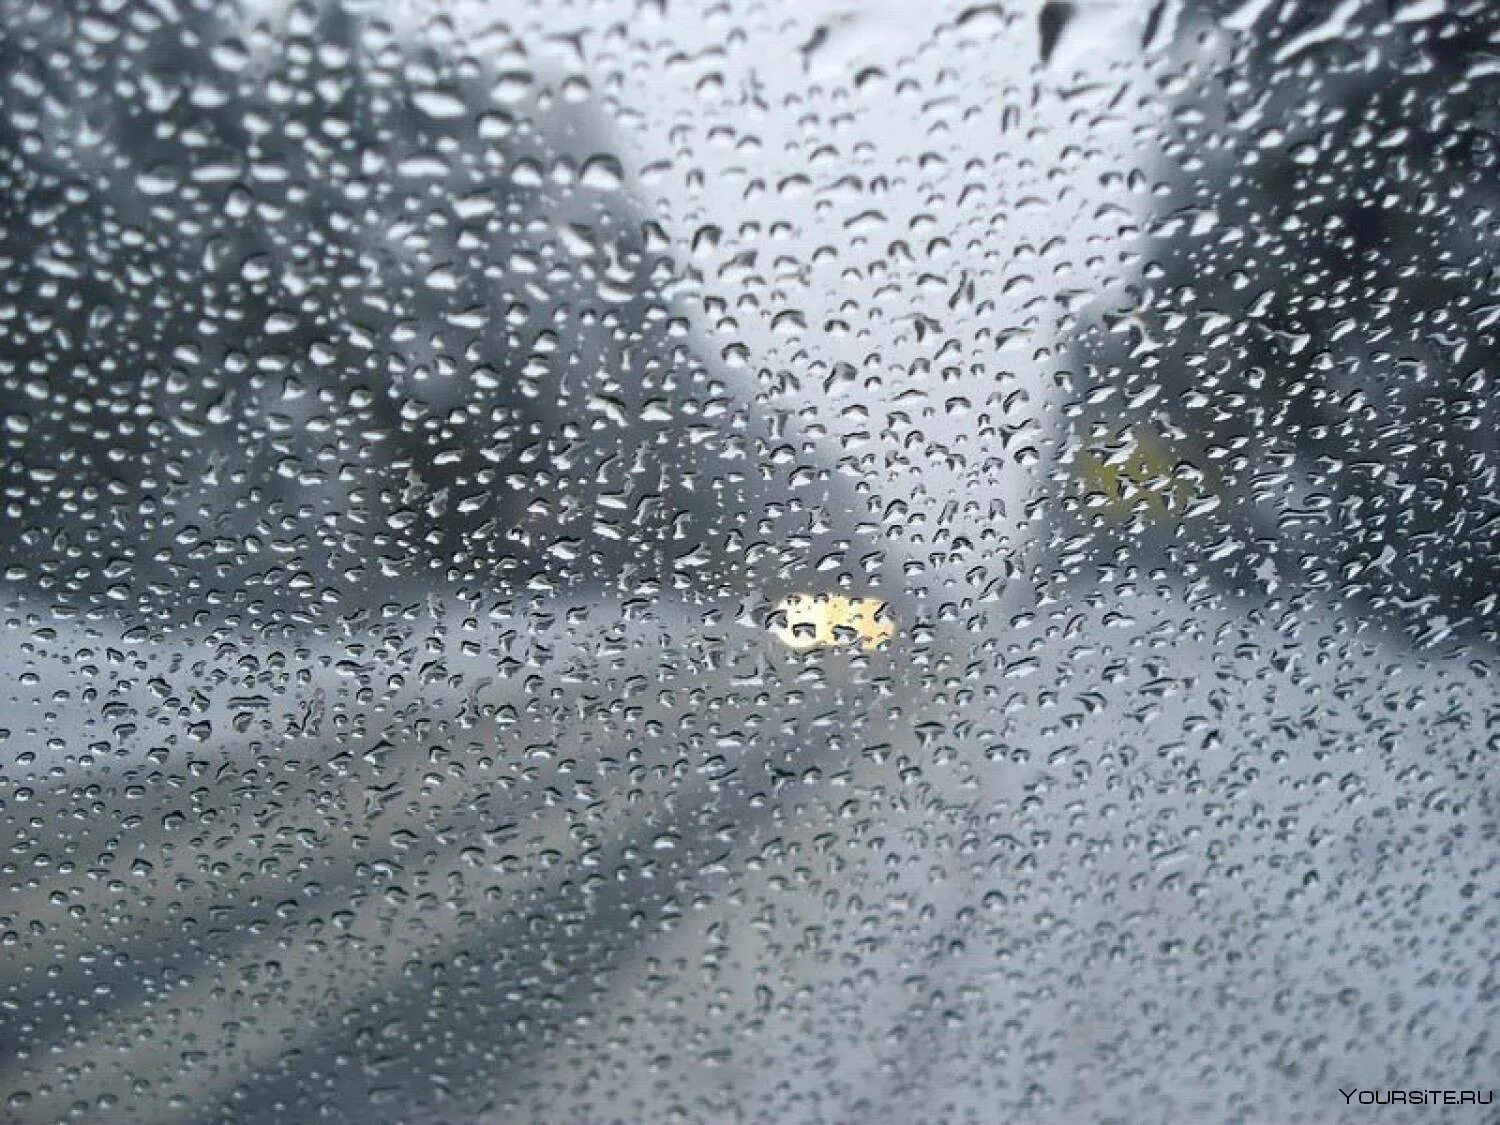 Капли на стекле. Капли на стекле автомобиля. Мокрое стекло автомобиля. Капли дождя на стекле авто.